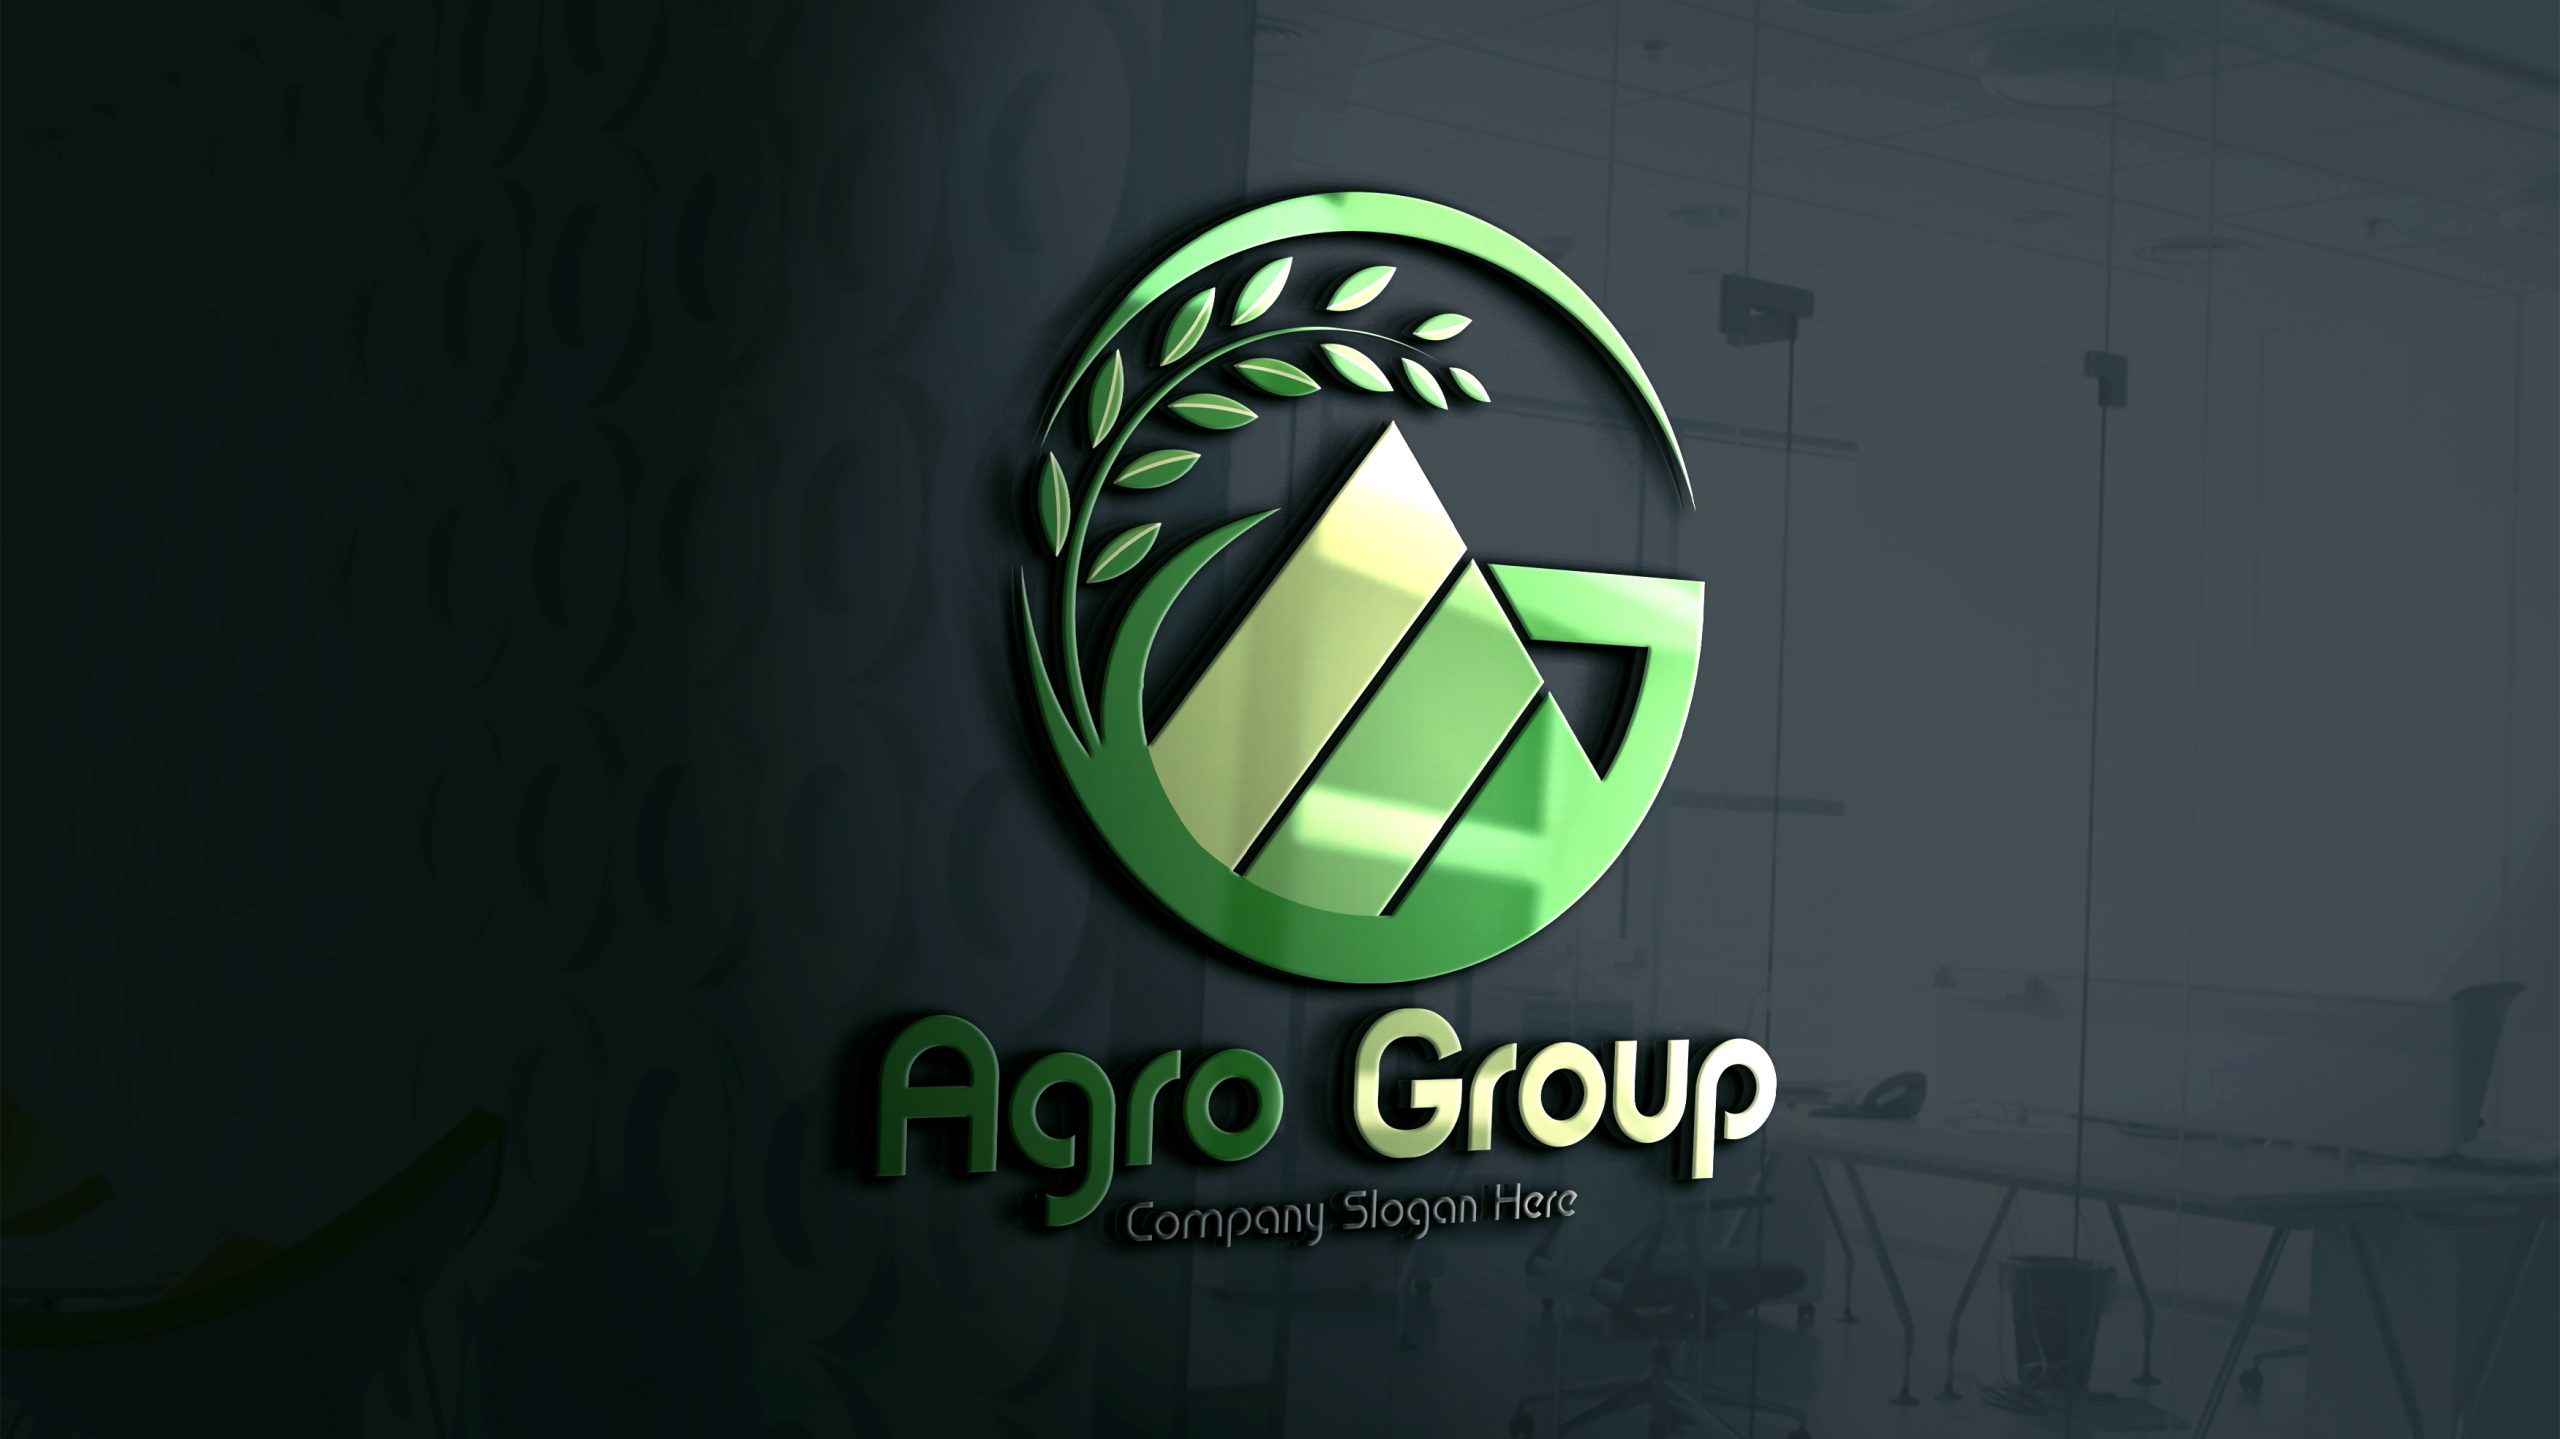 Logo Design Tutorial - How to Make Agro Group Logo In Adobe Photoshop